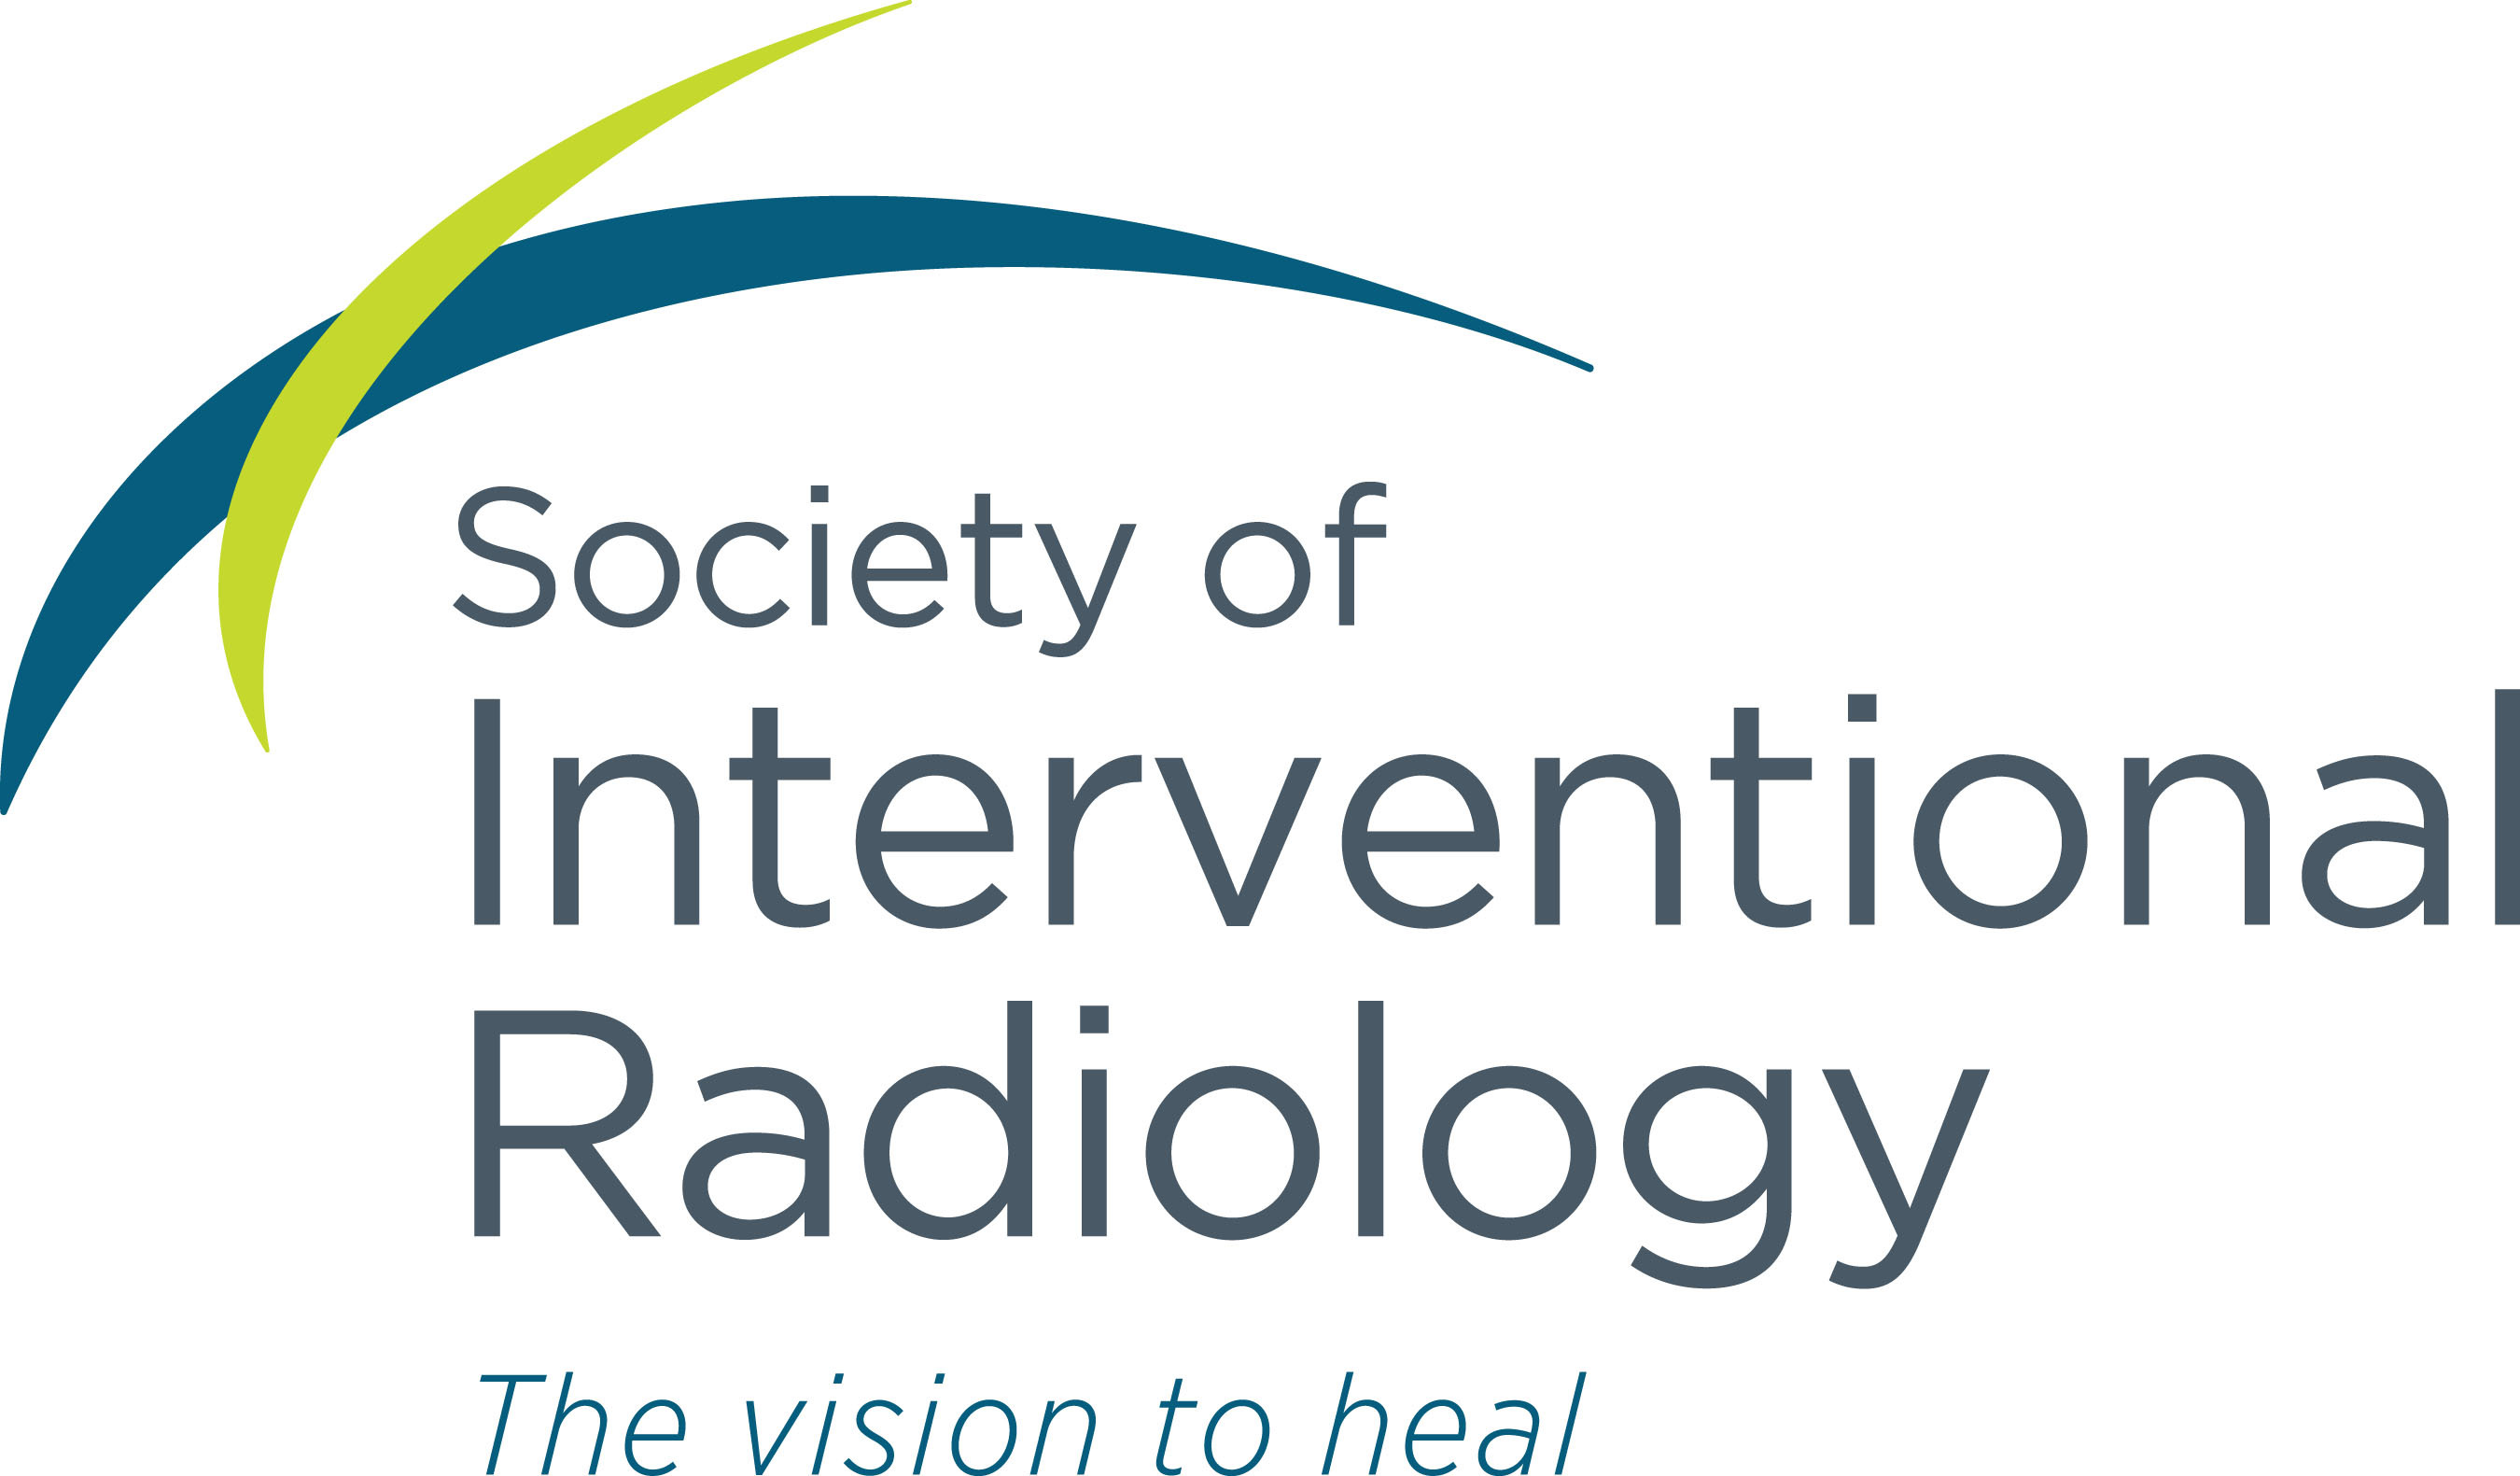 Society of Interventional Radiology